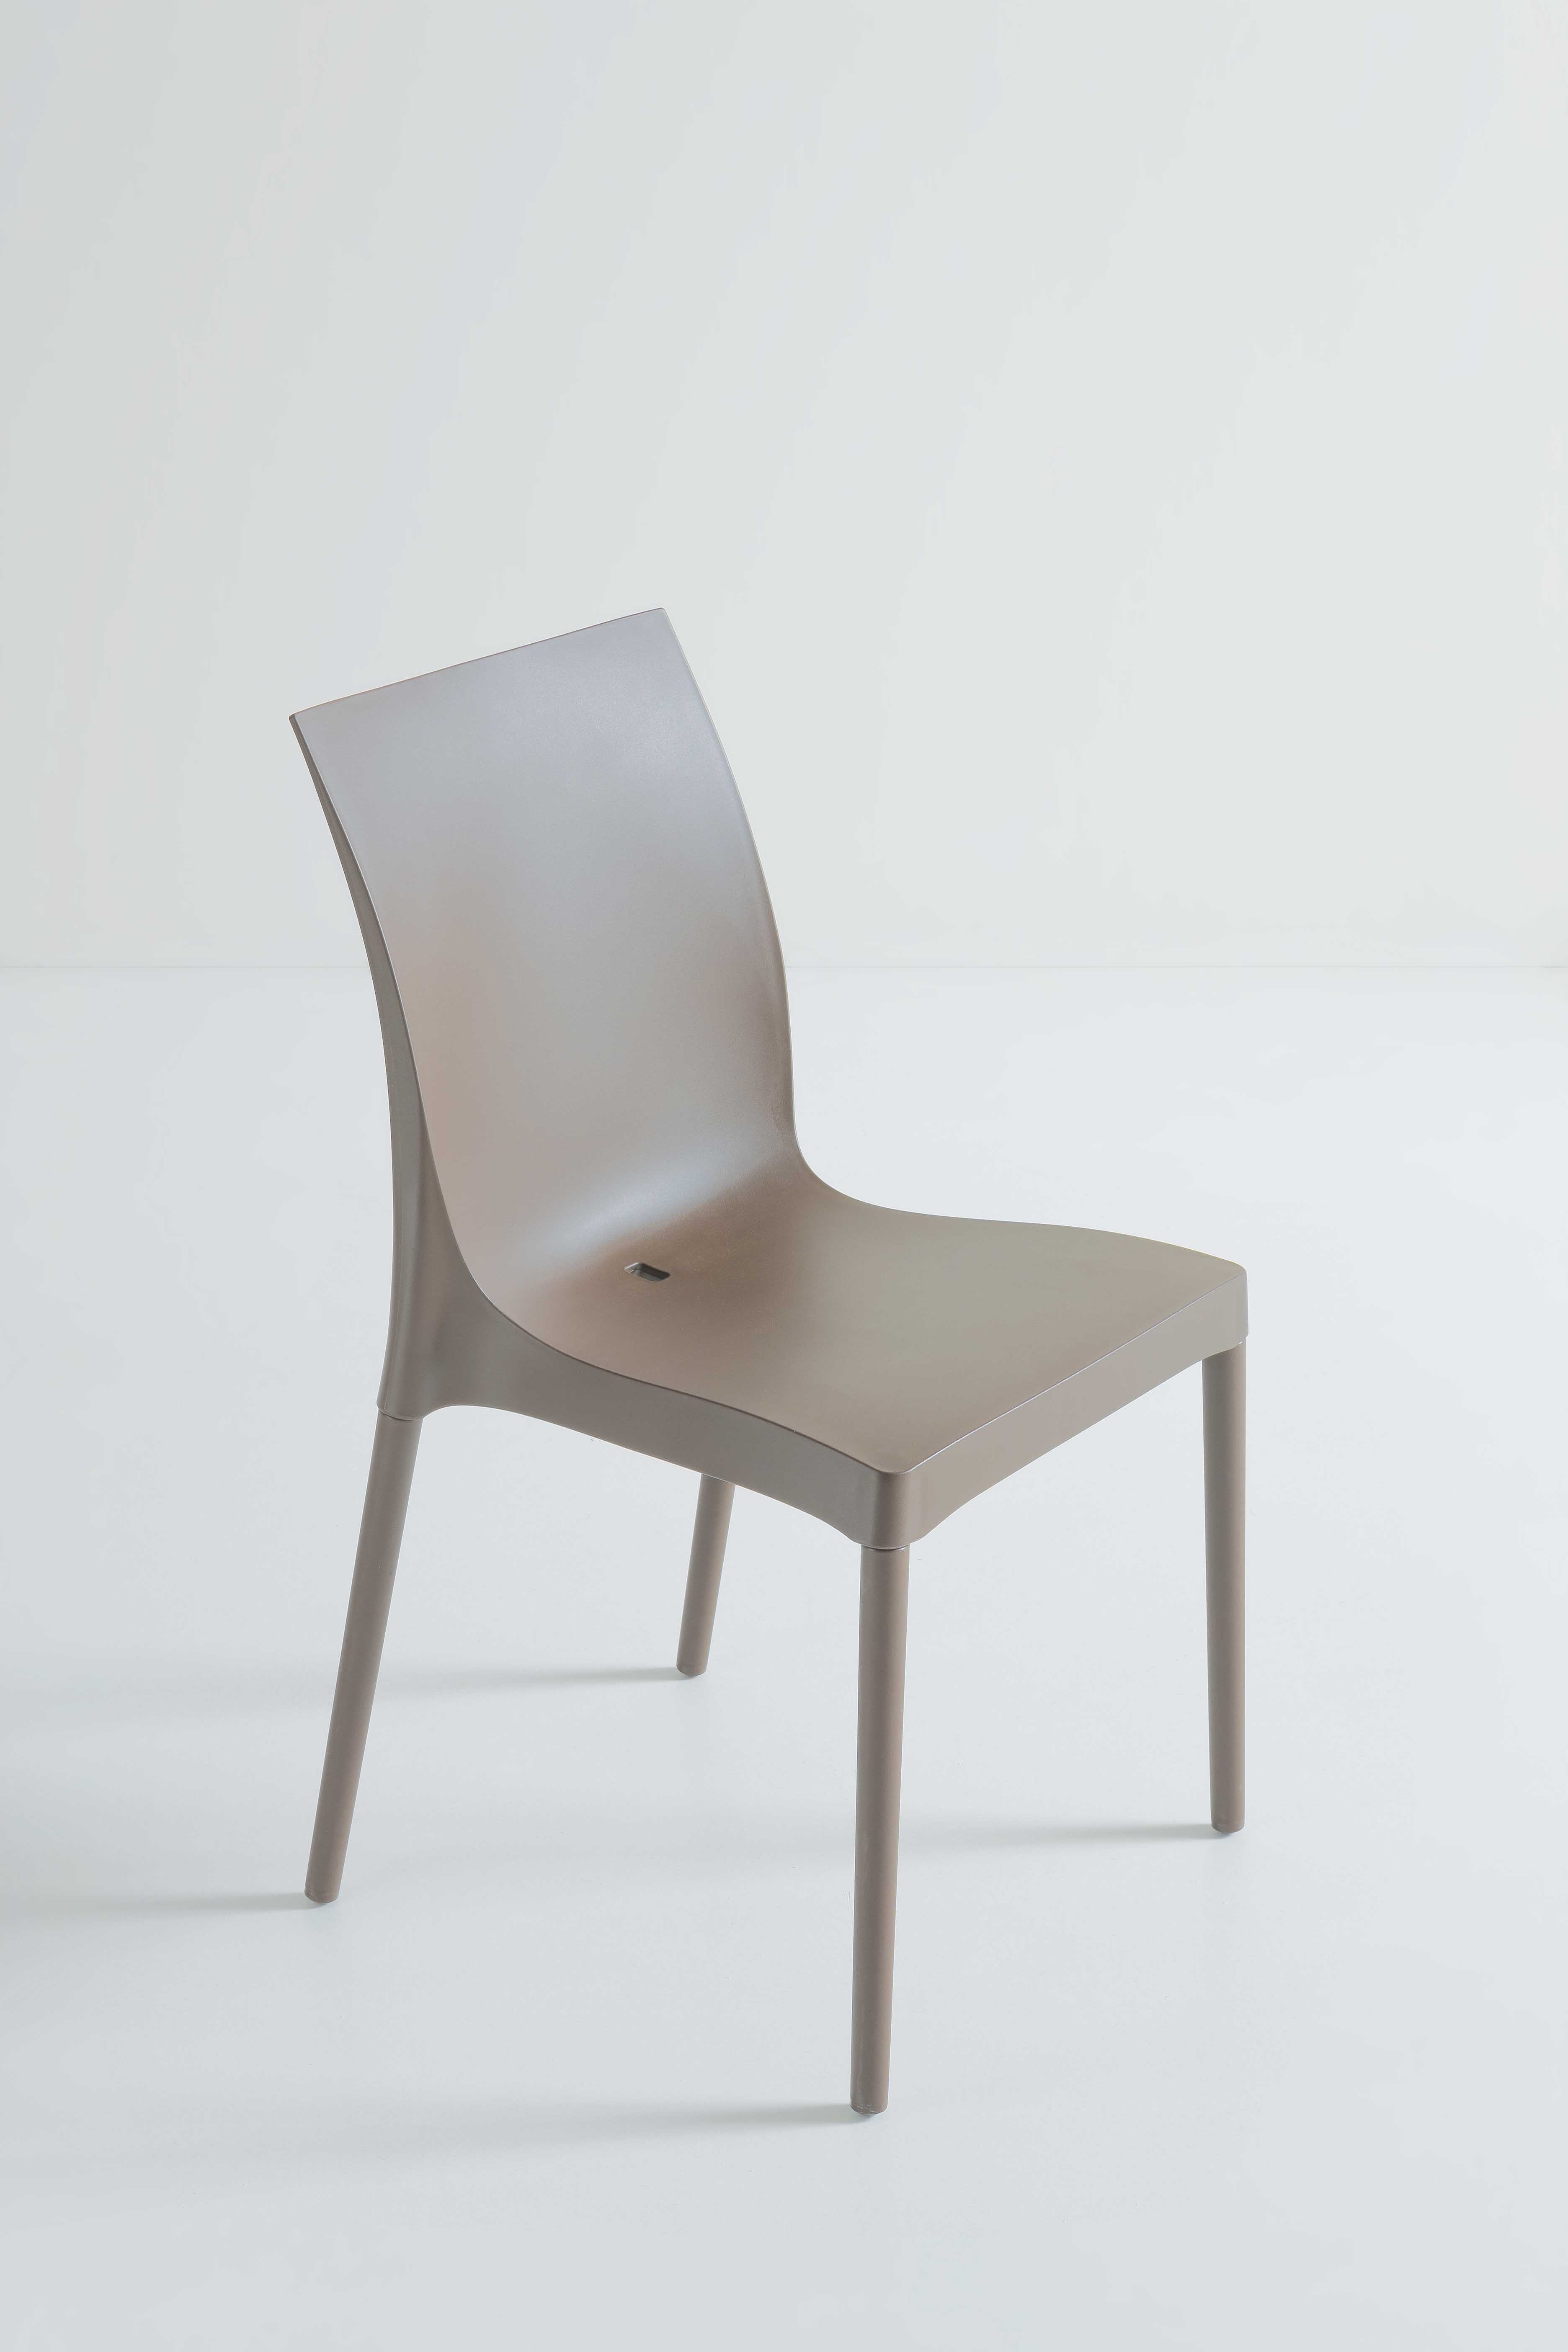 GABER IRIS Gartenstuhl, stapelbar, Metall mit Kunststoff Sitzschale, verschiedene Farben